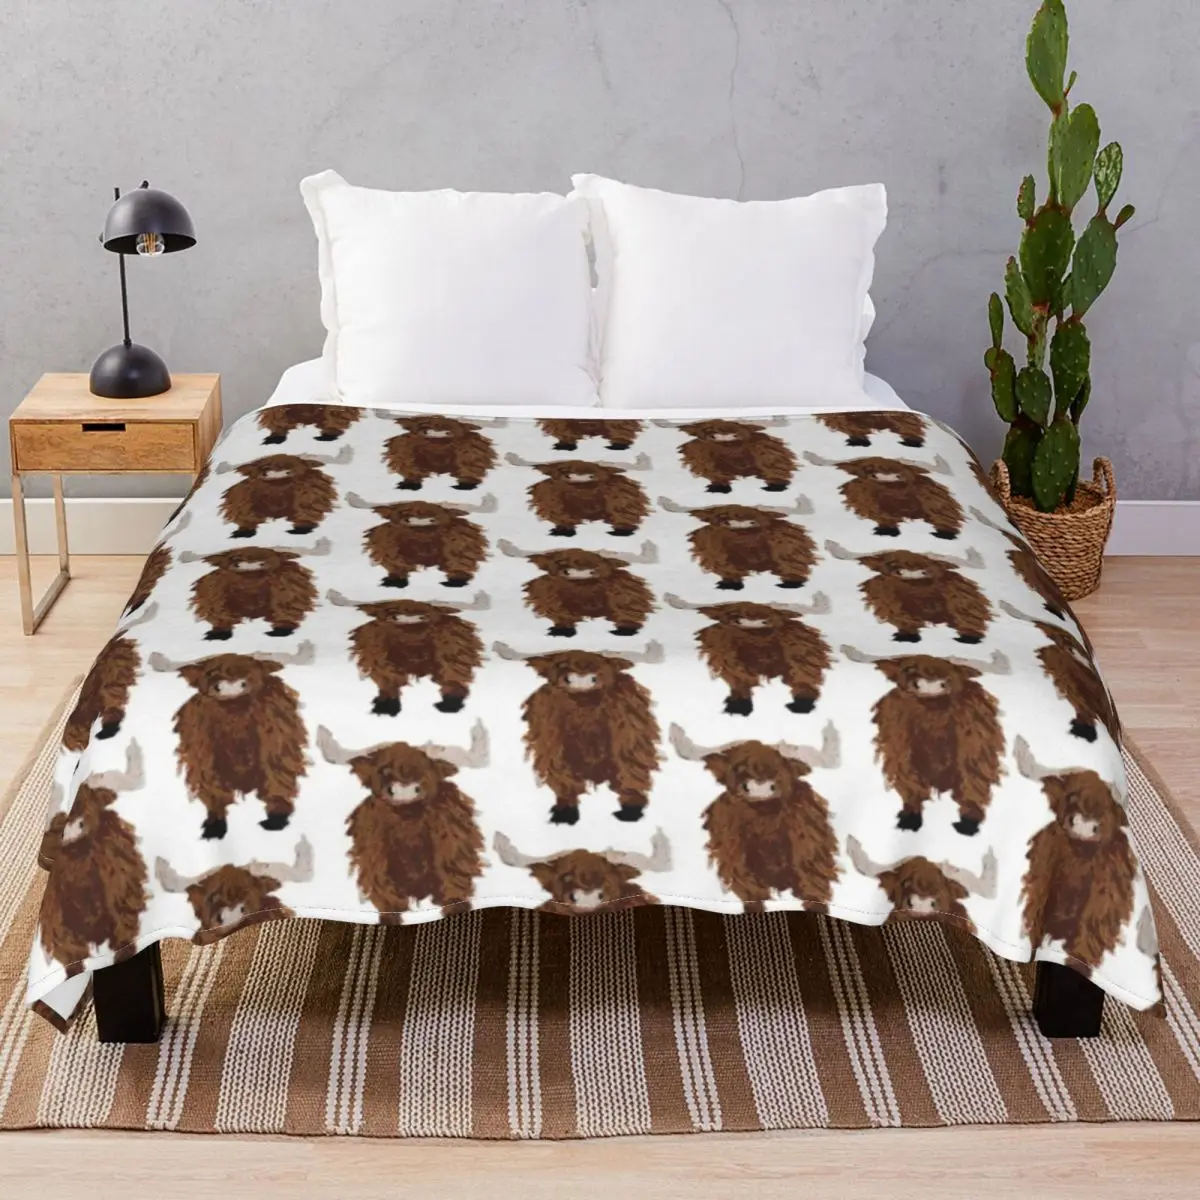 Highland Cow Blanket Fleece Plush Decoration Portable Throw Blankets for Bed Sofa Travel Cinema